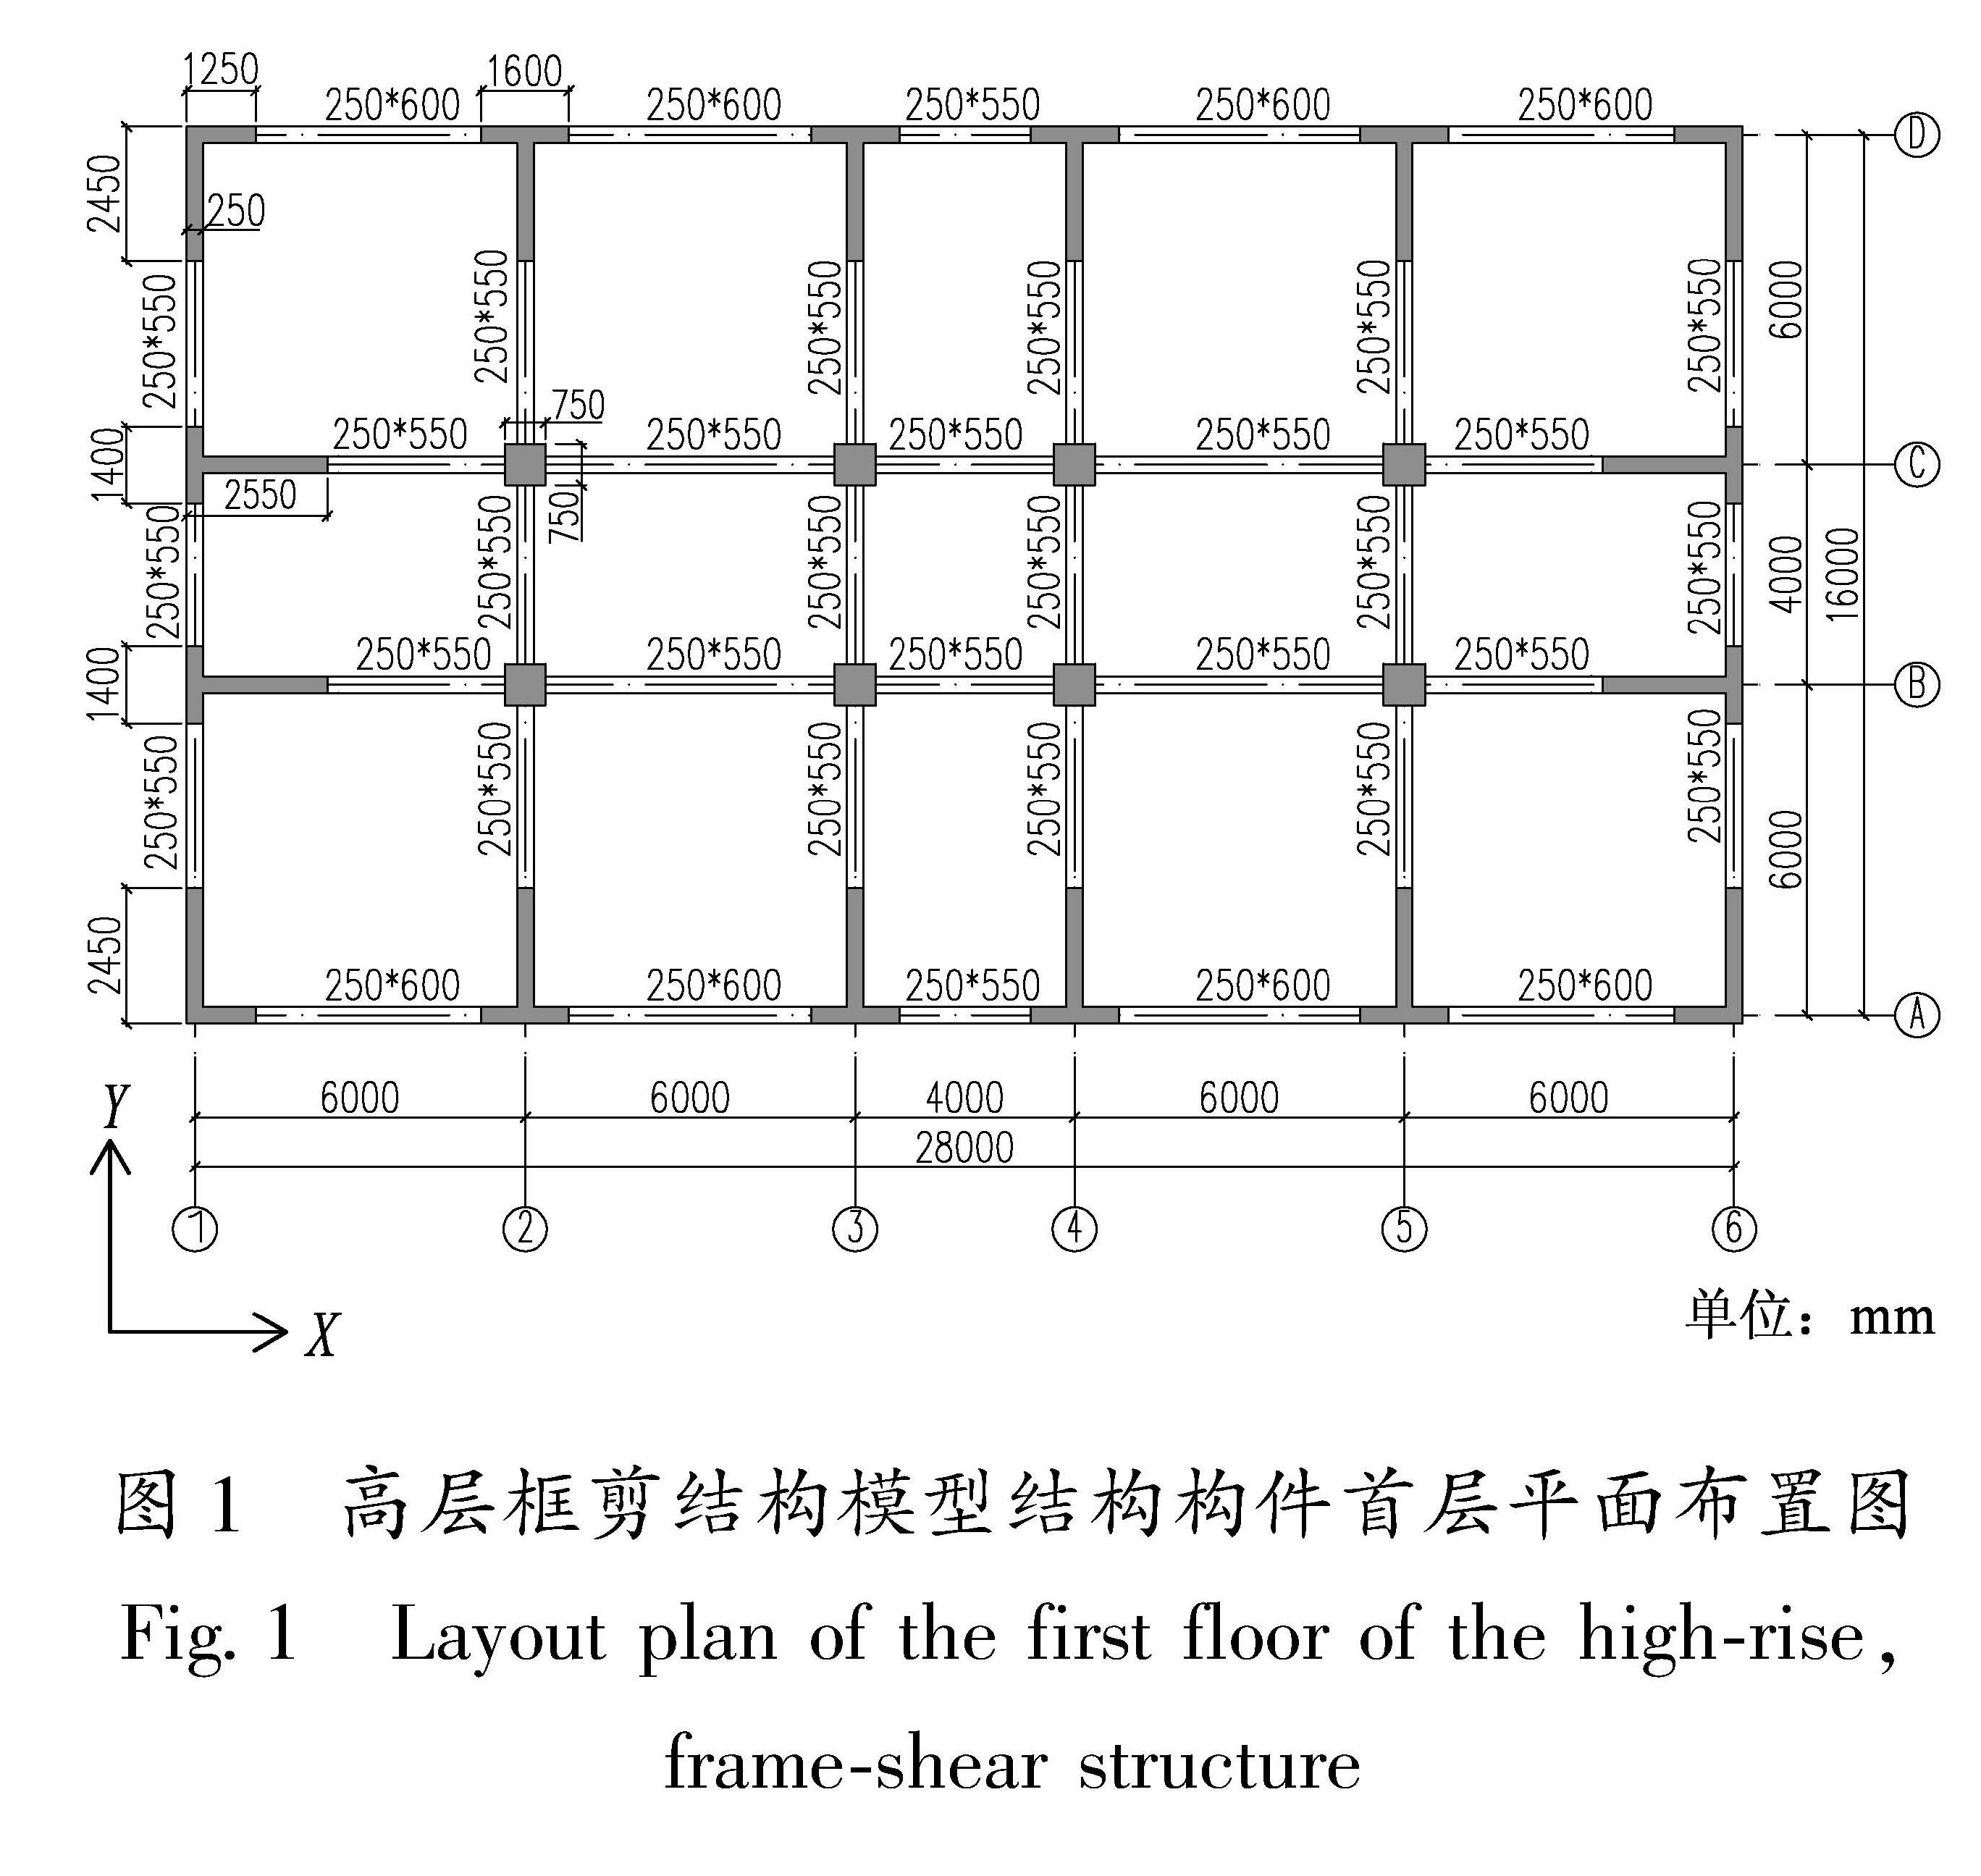 图1 高层框剪结构模型结构构件首层平面布置图<br/>Fig.1 Layout plan of the first floor of the high-rise,frame-shear structure